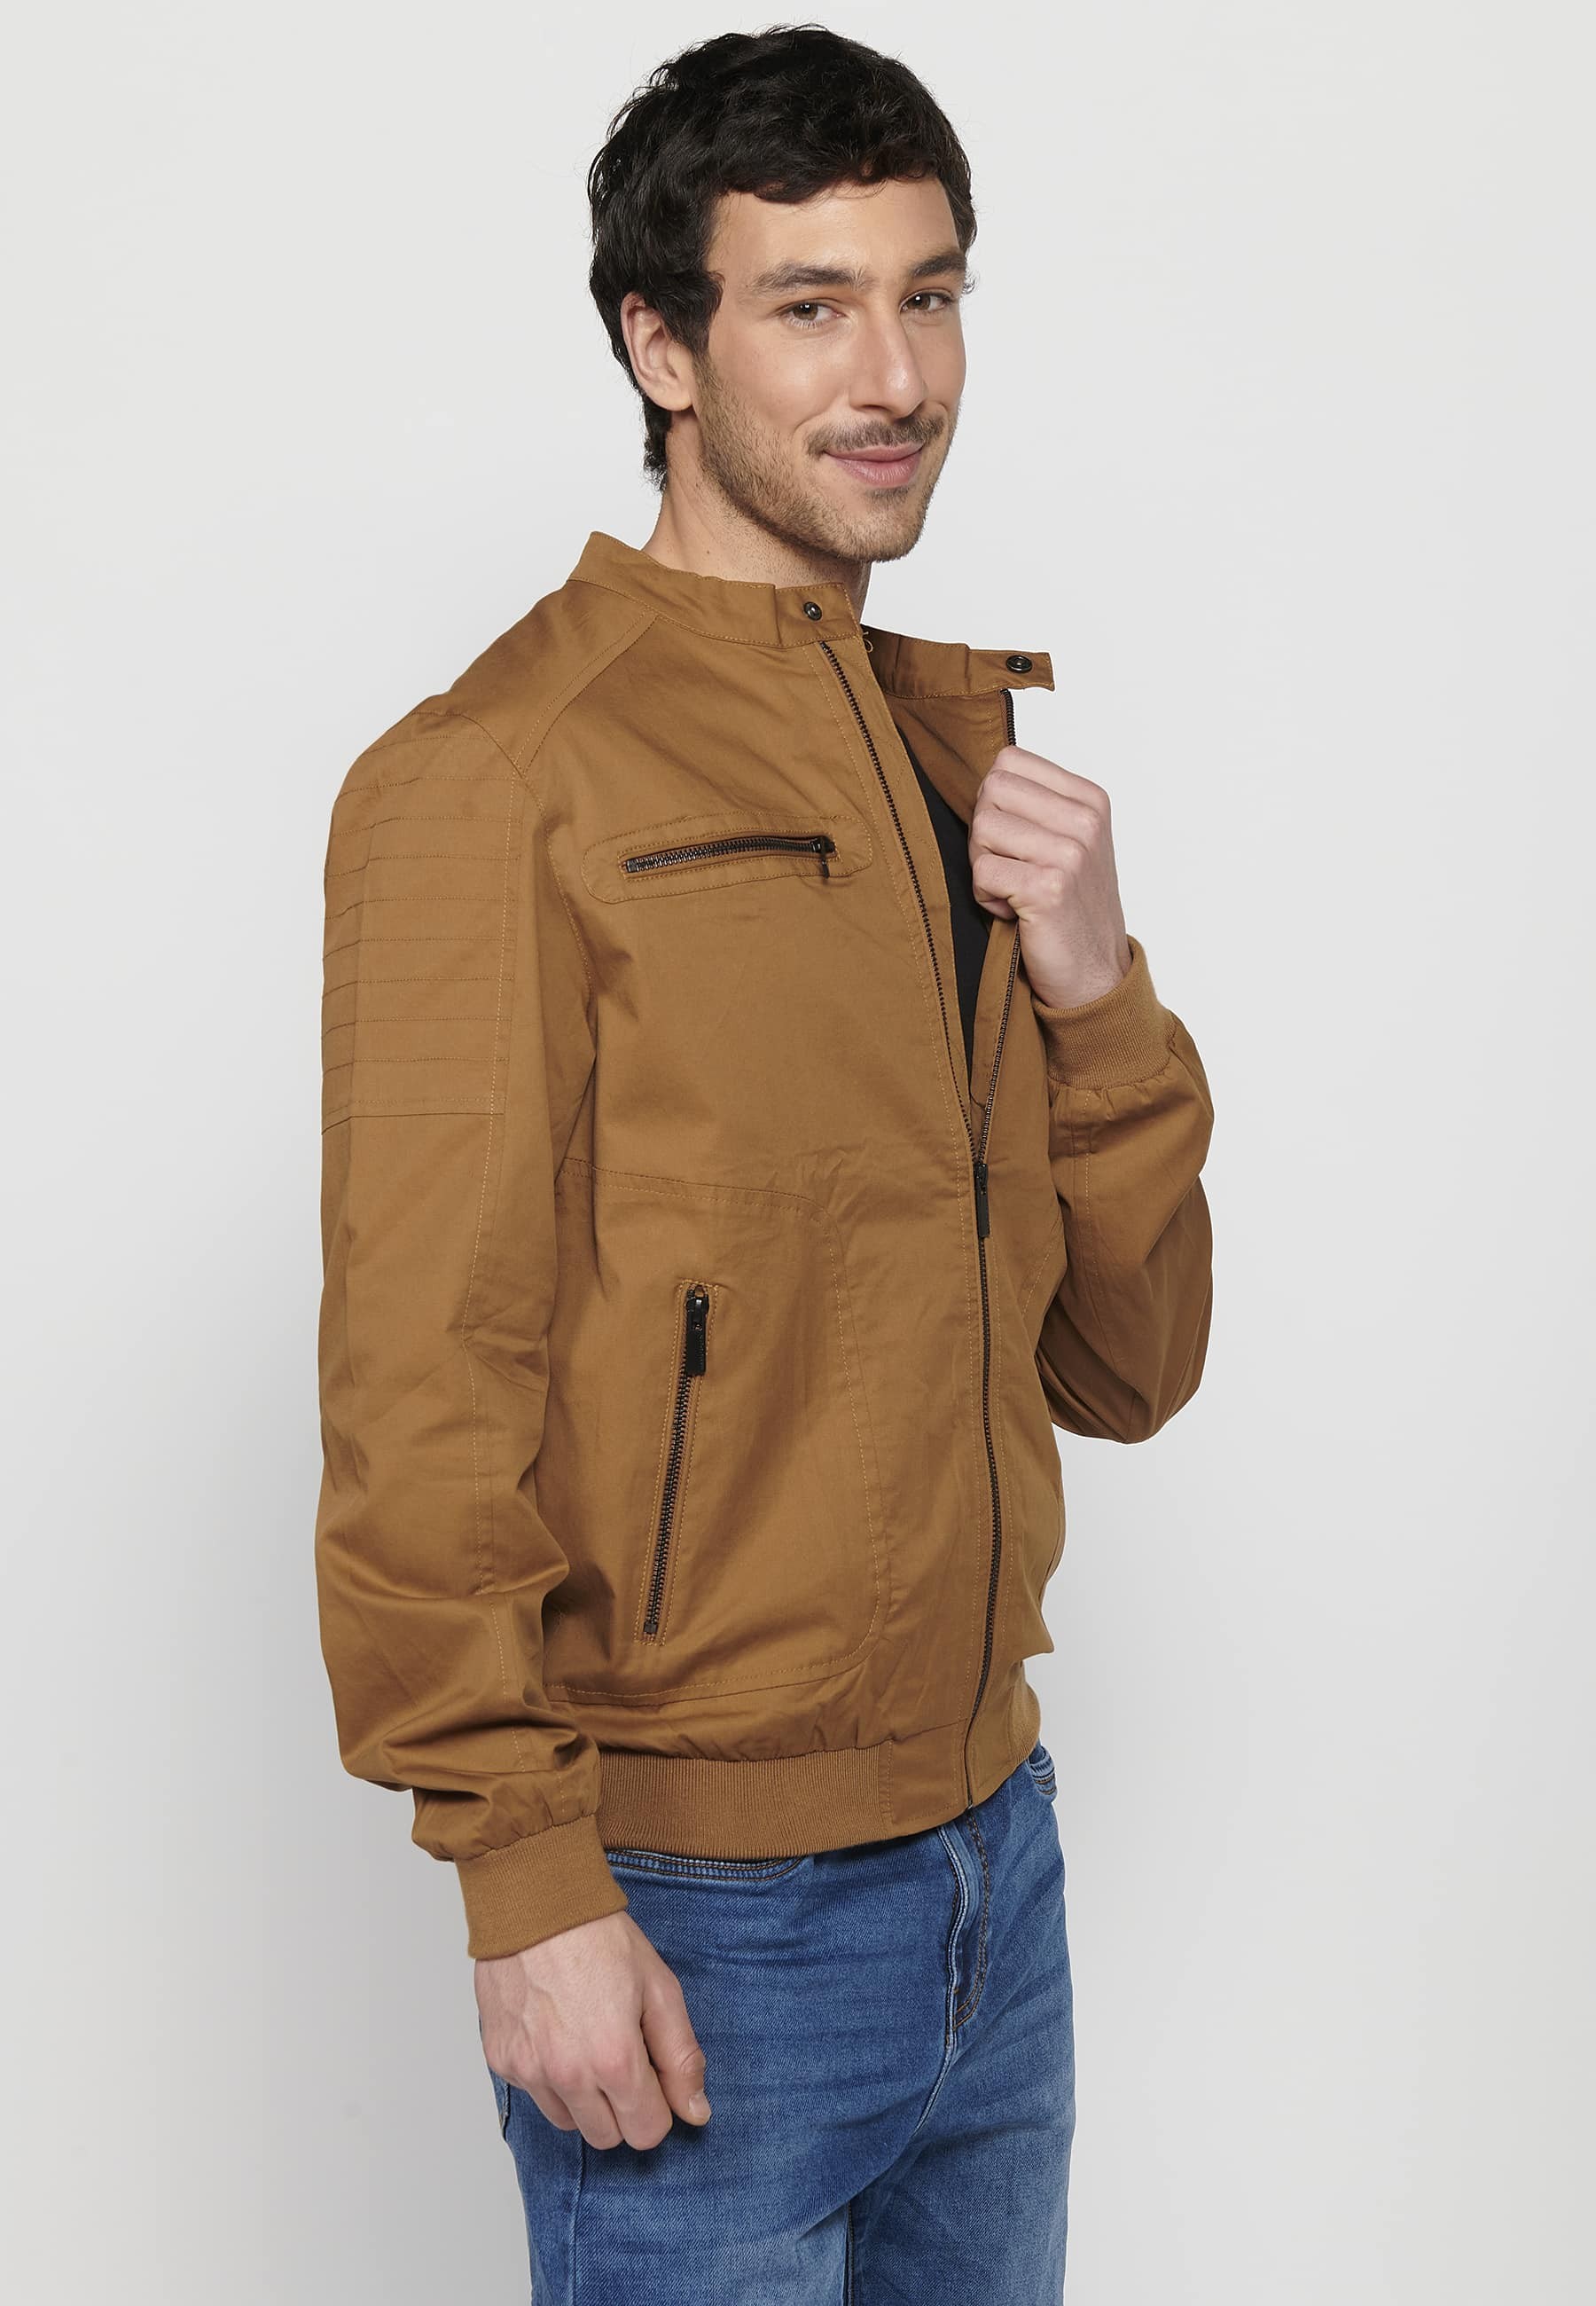 High collar bomber jacket, front zipper closure, brown color for men